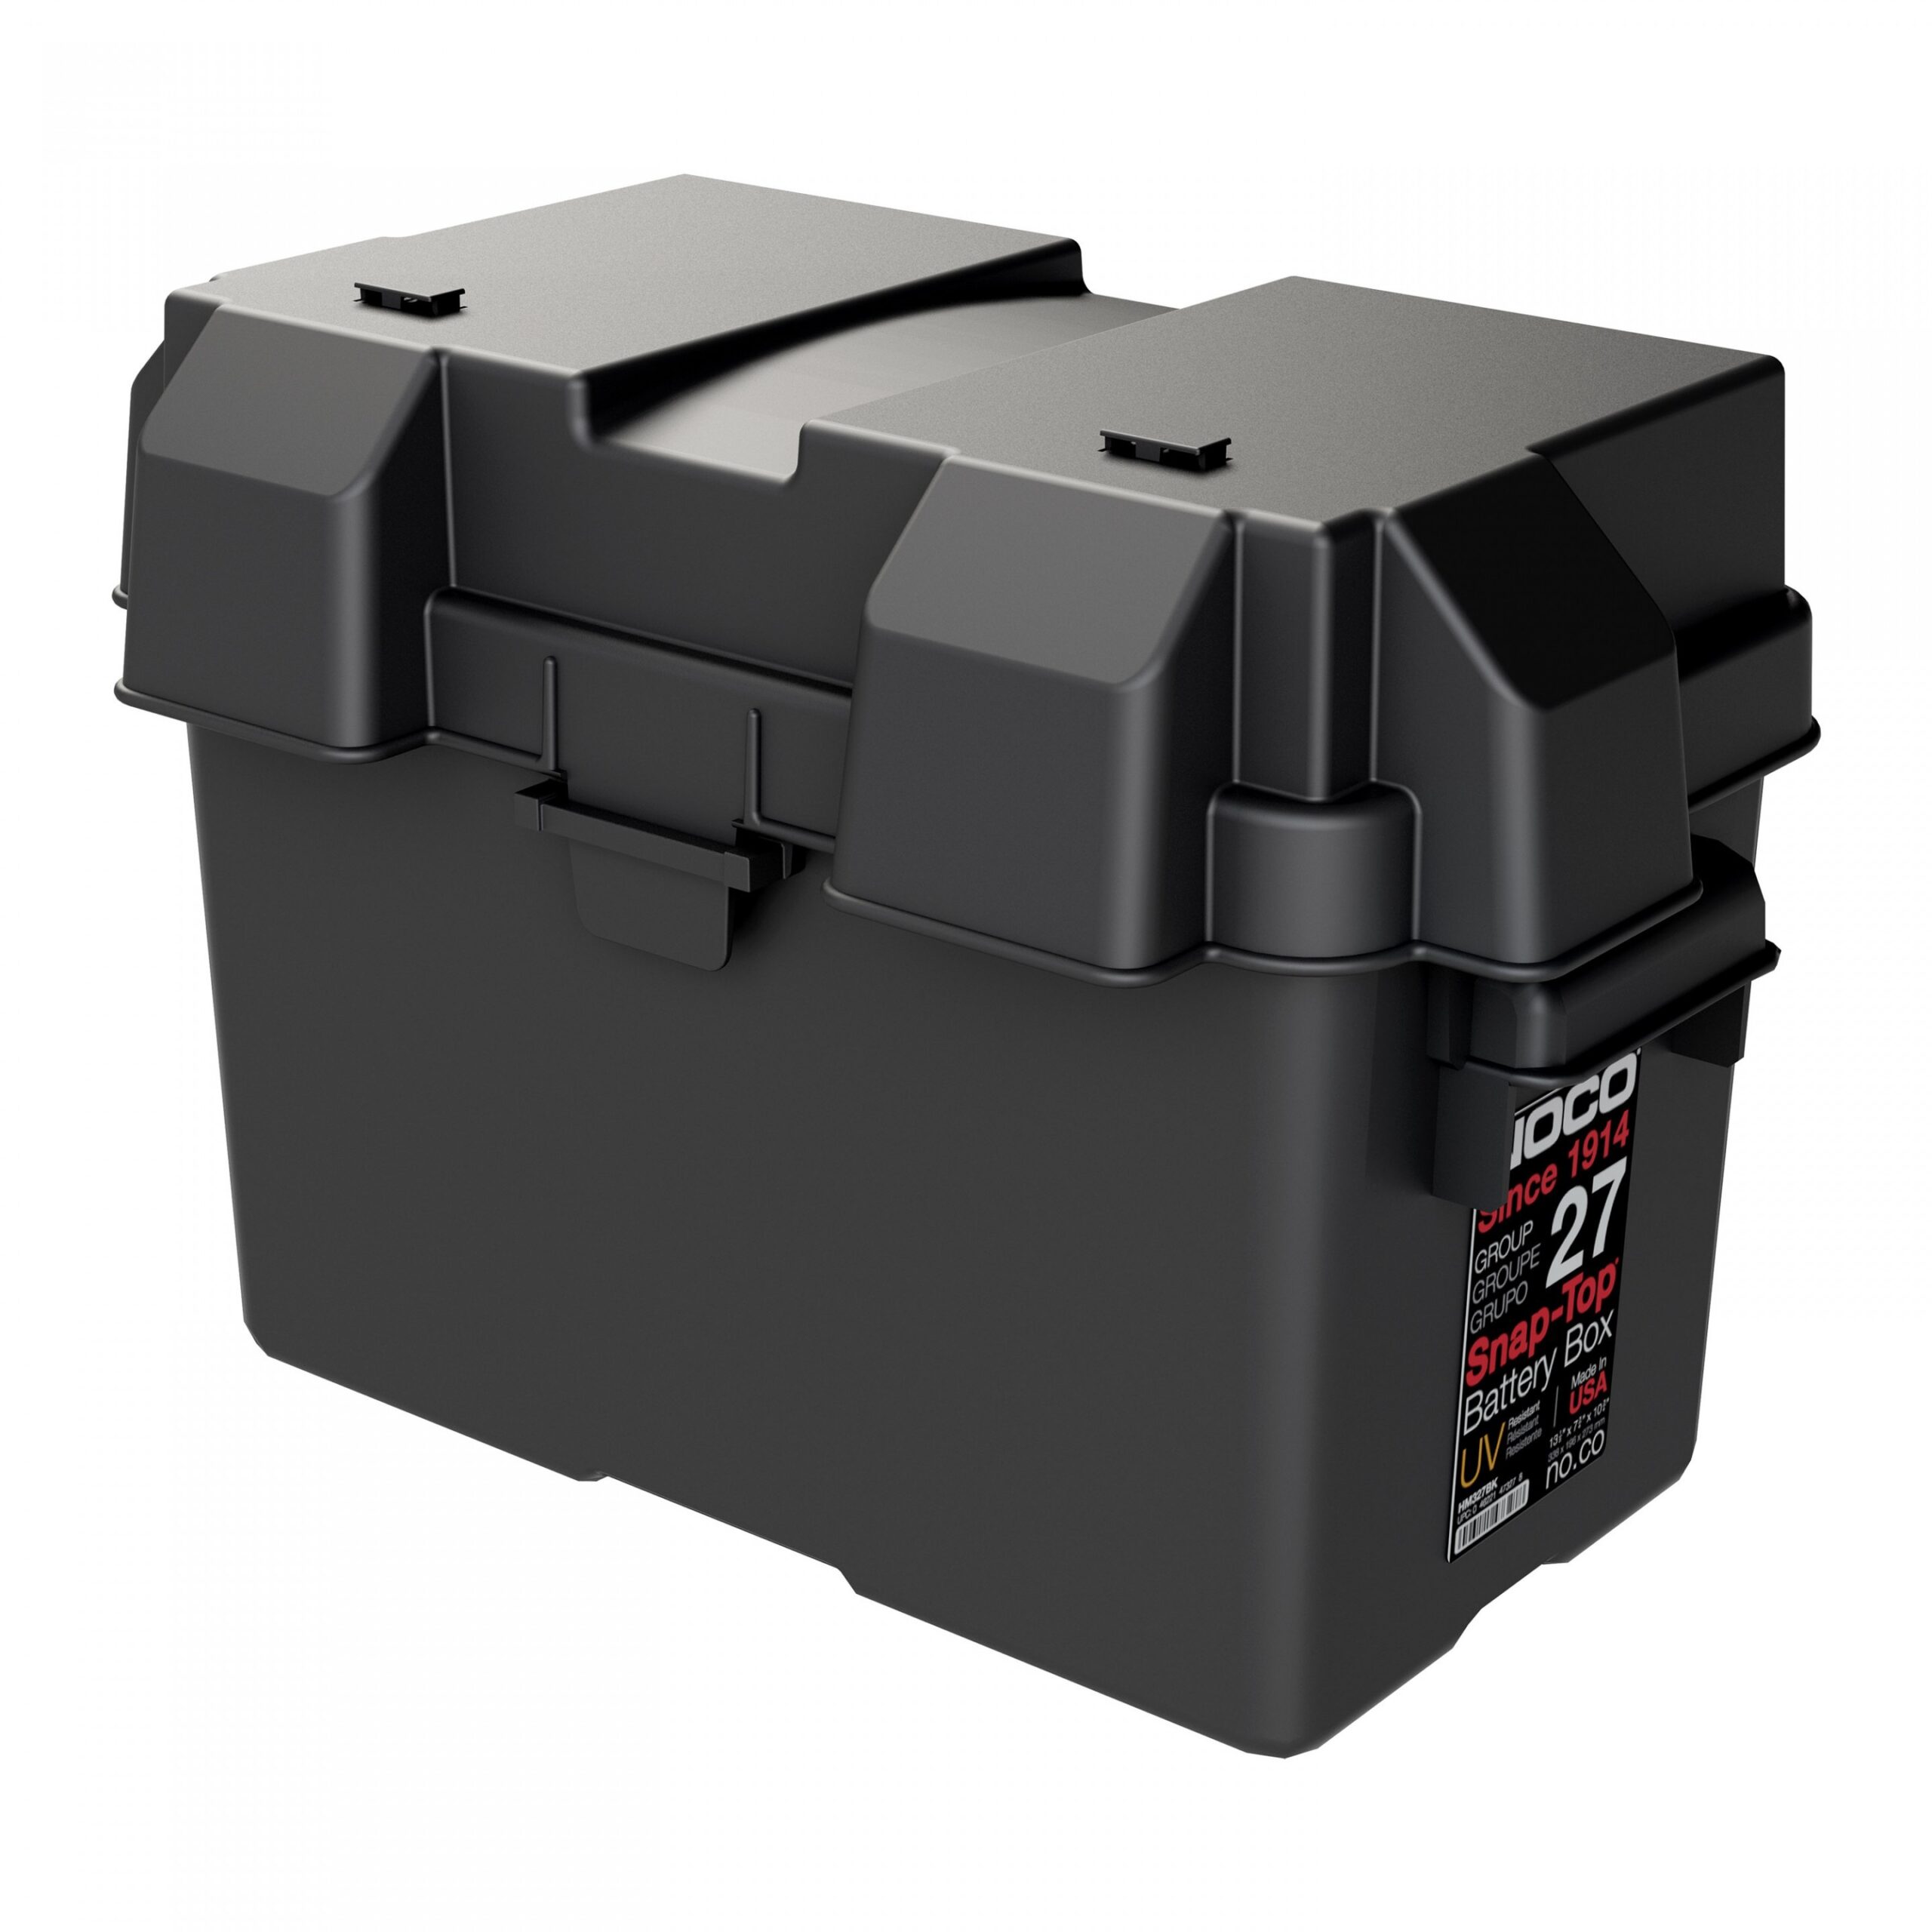 Car Battery Box Kit - Jean Meridith